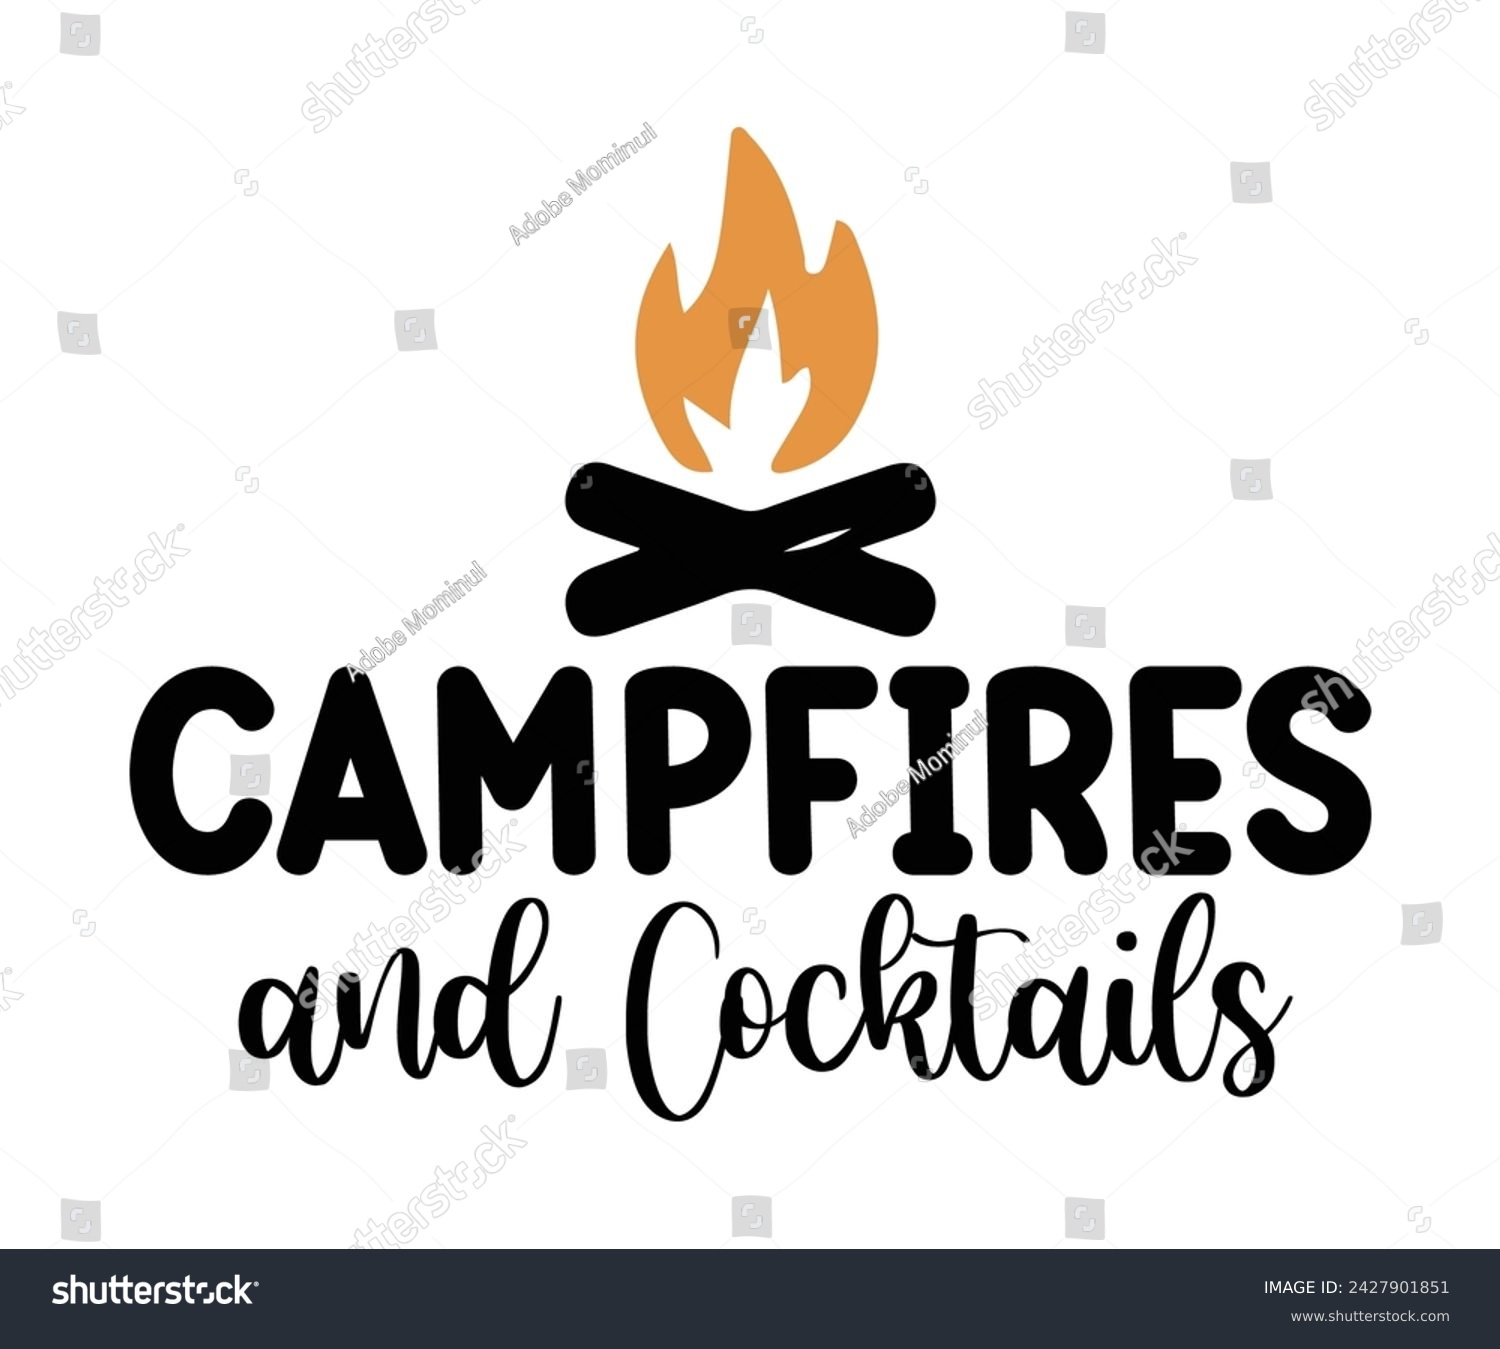 SVG of Campfire And Cocktails Svg,Happy Camper Svg,Camping Svg,Adventure Svg,Hiking Svg,Camp Saying,Camp Life Svg,Svg Cut Files, Png,Mountain T-shirt,Instant Download svg